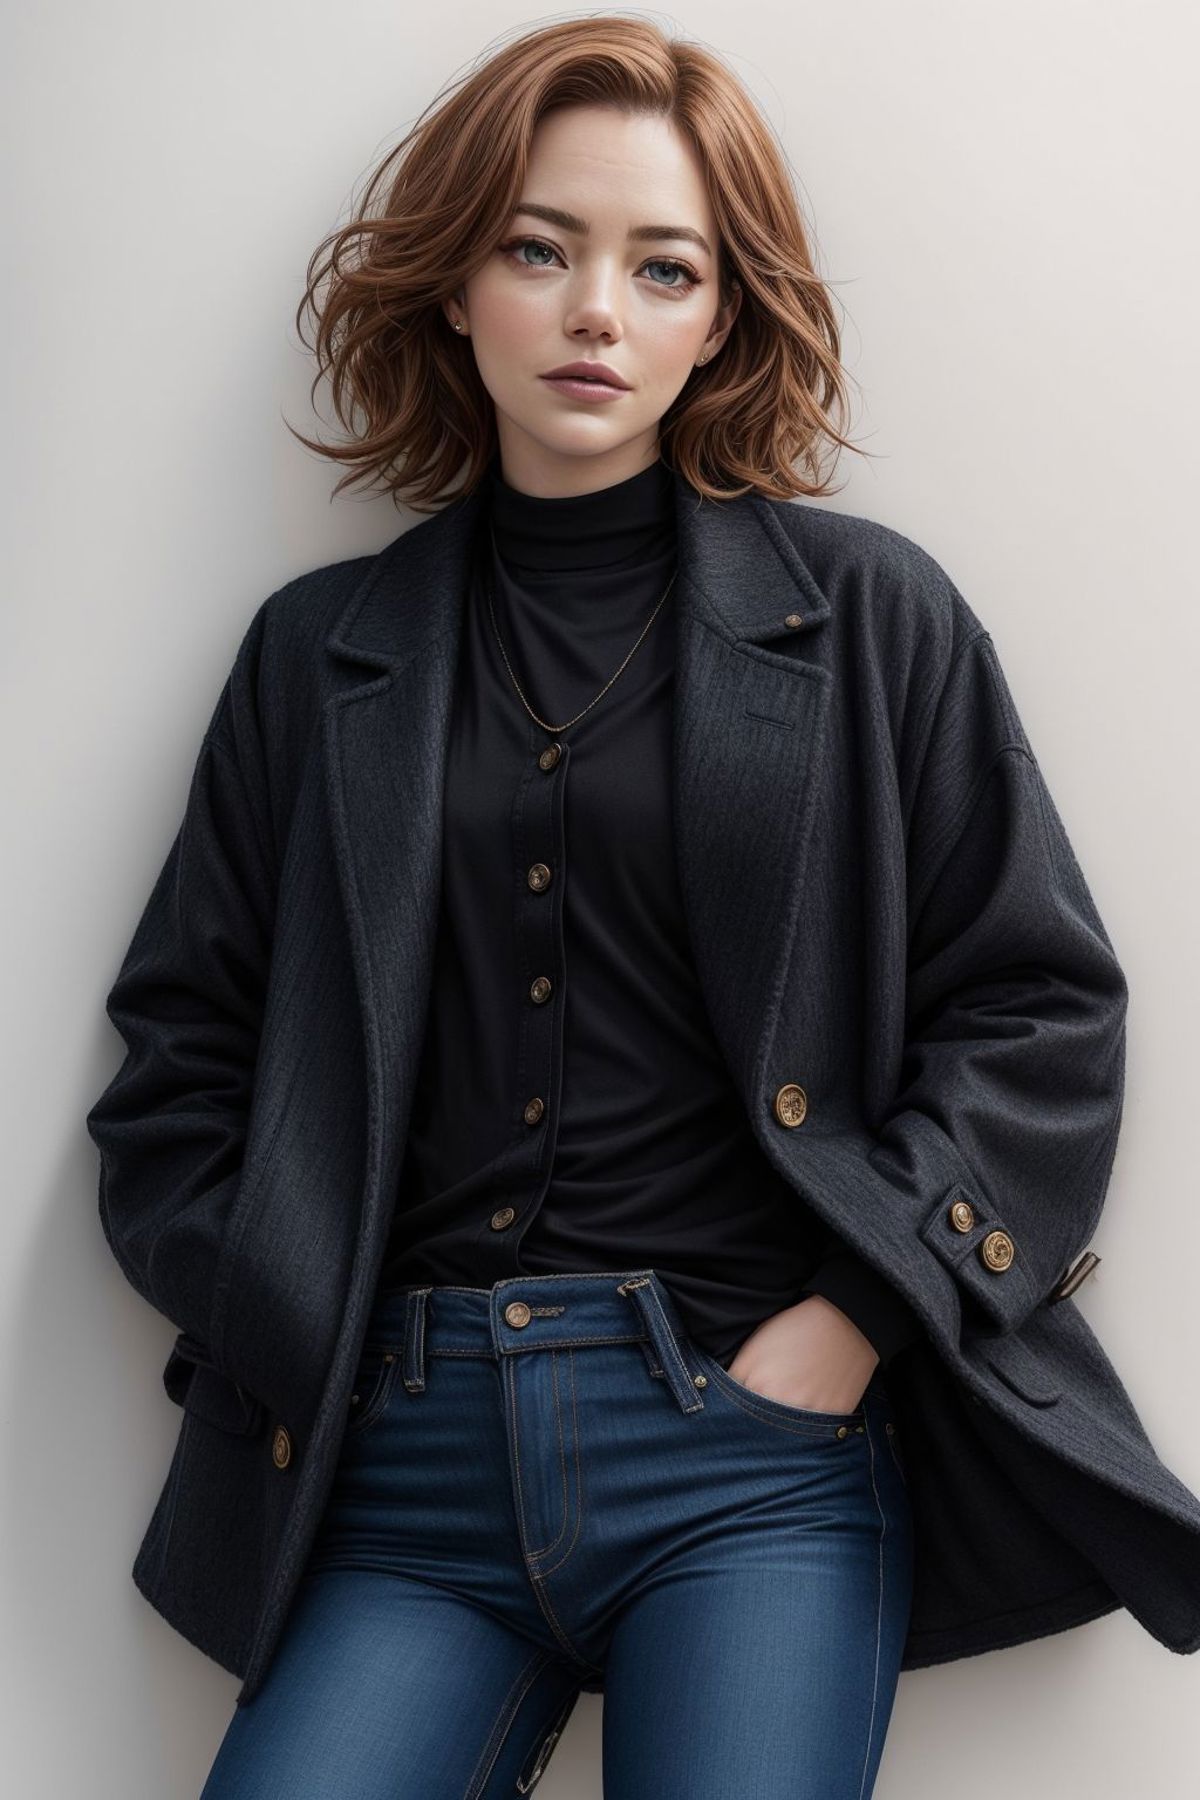 Emma Stone - Actress image by RavinDark